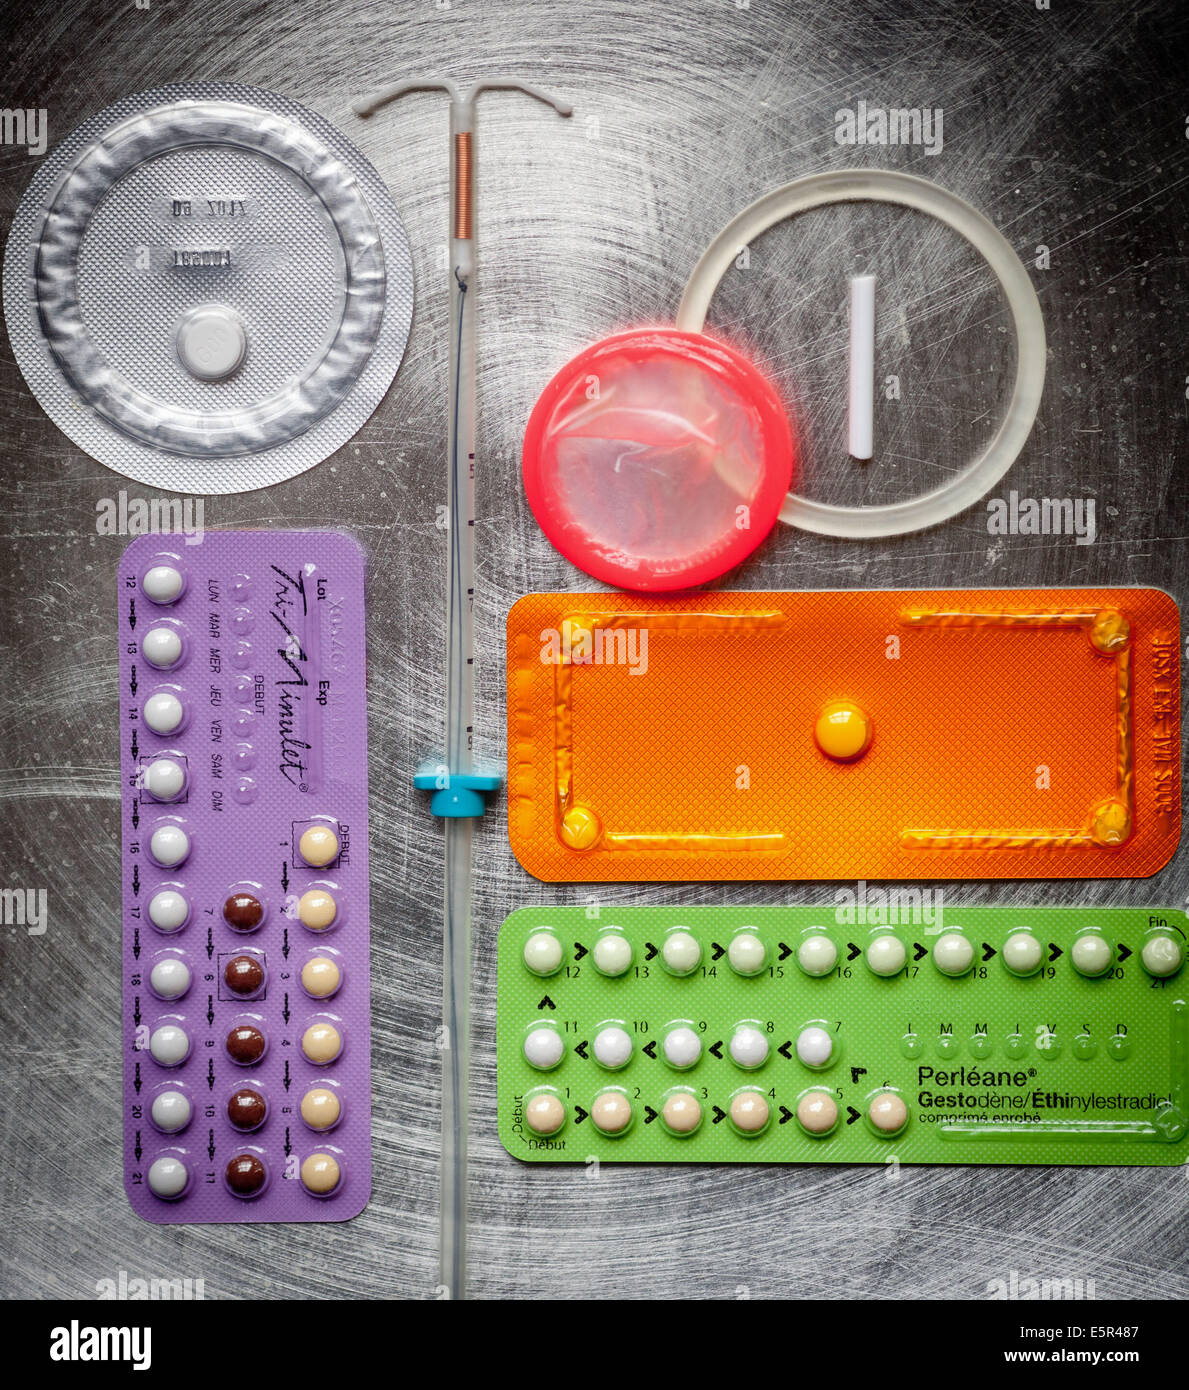 Contraceptives. Stock Photo